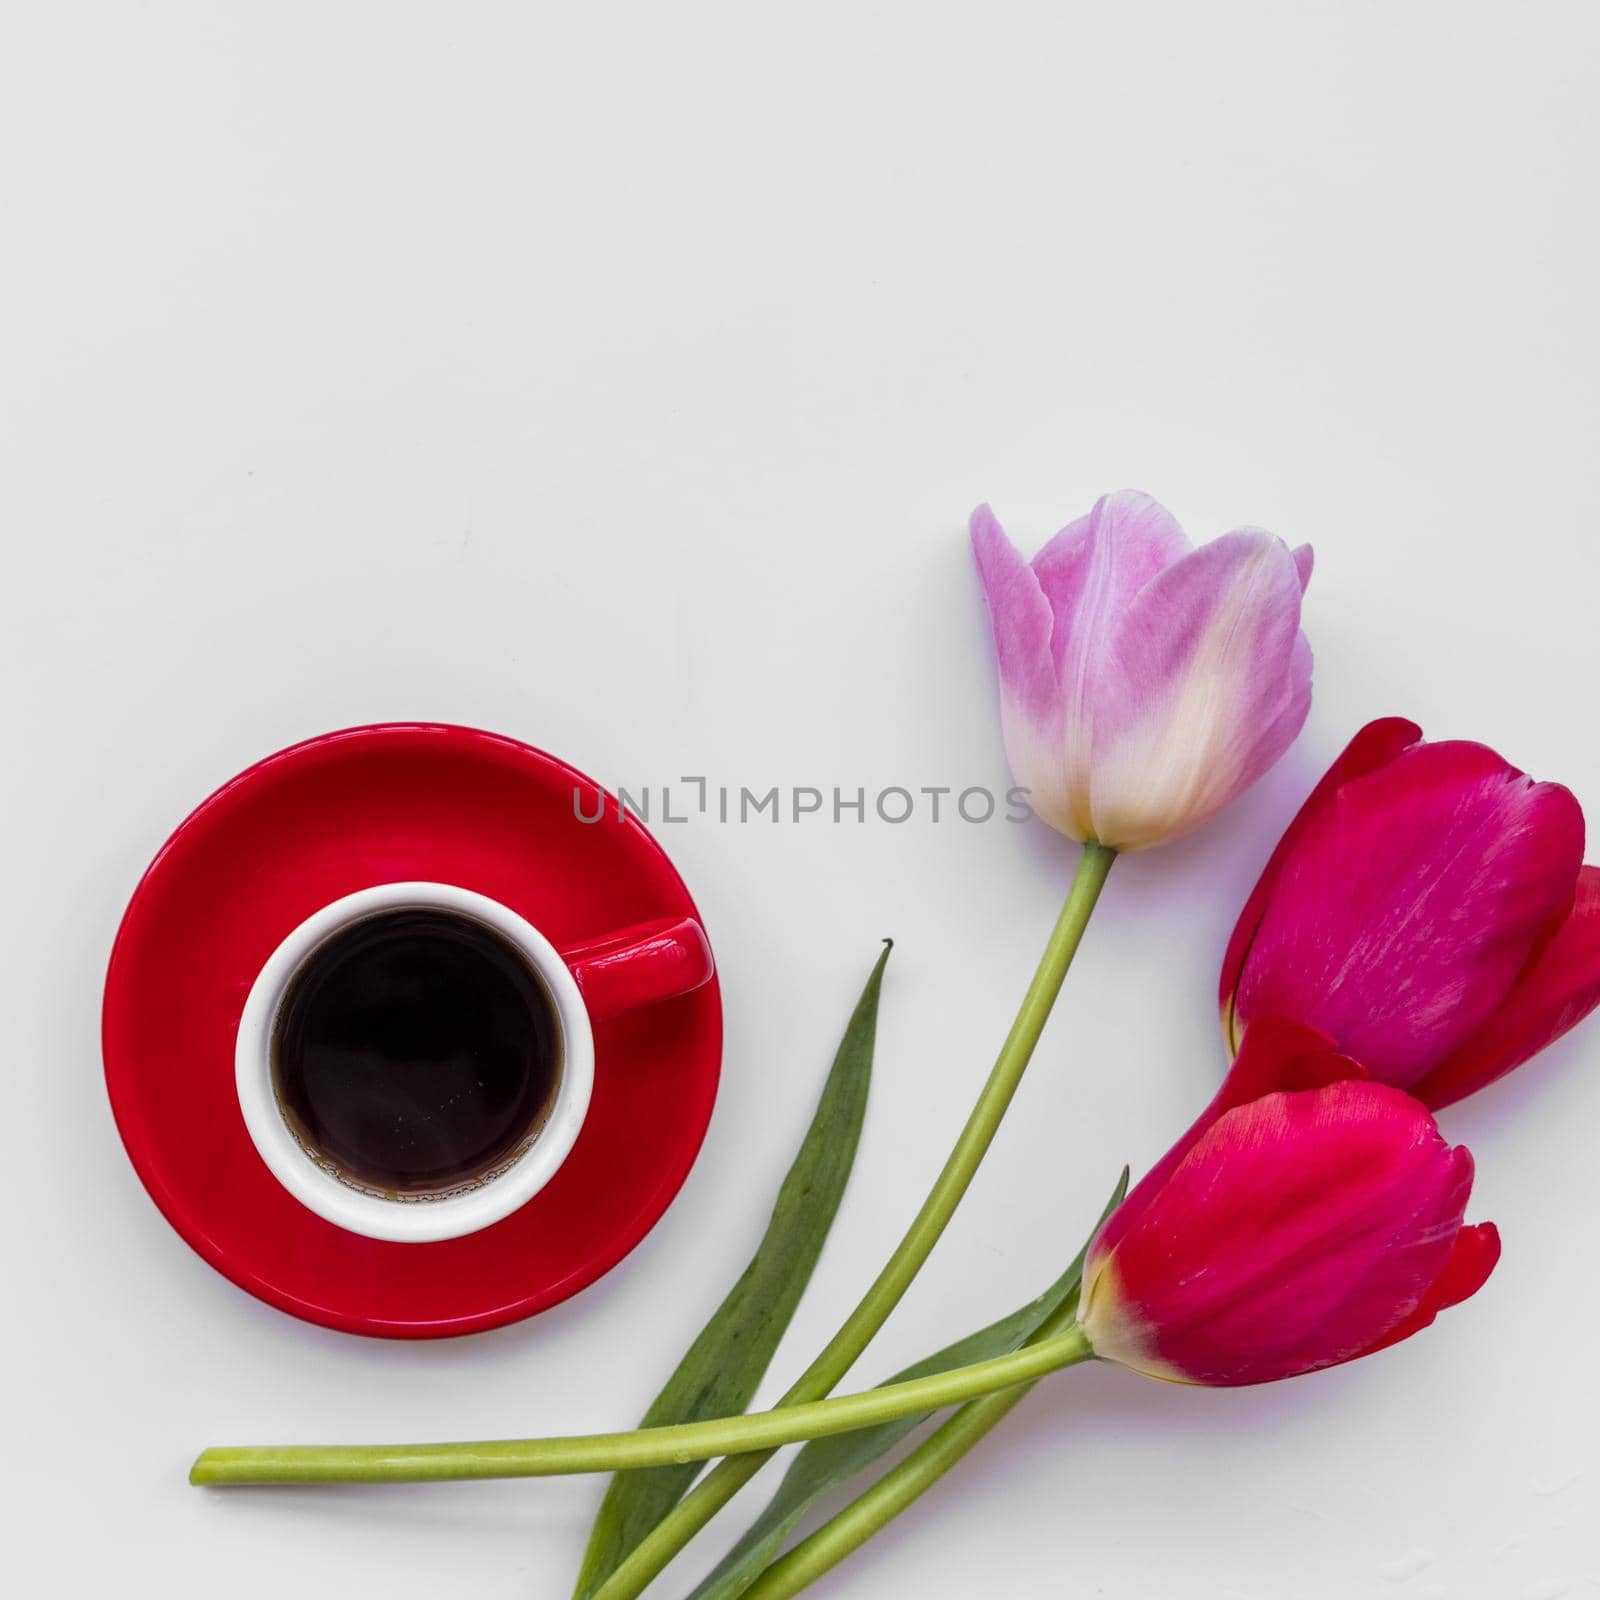 bunch fresh flowers near cup coffee. High quality beautiful photo concept by Zahard